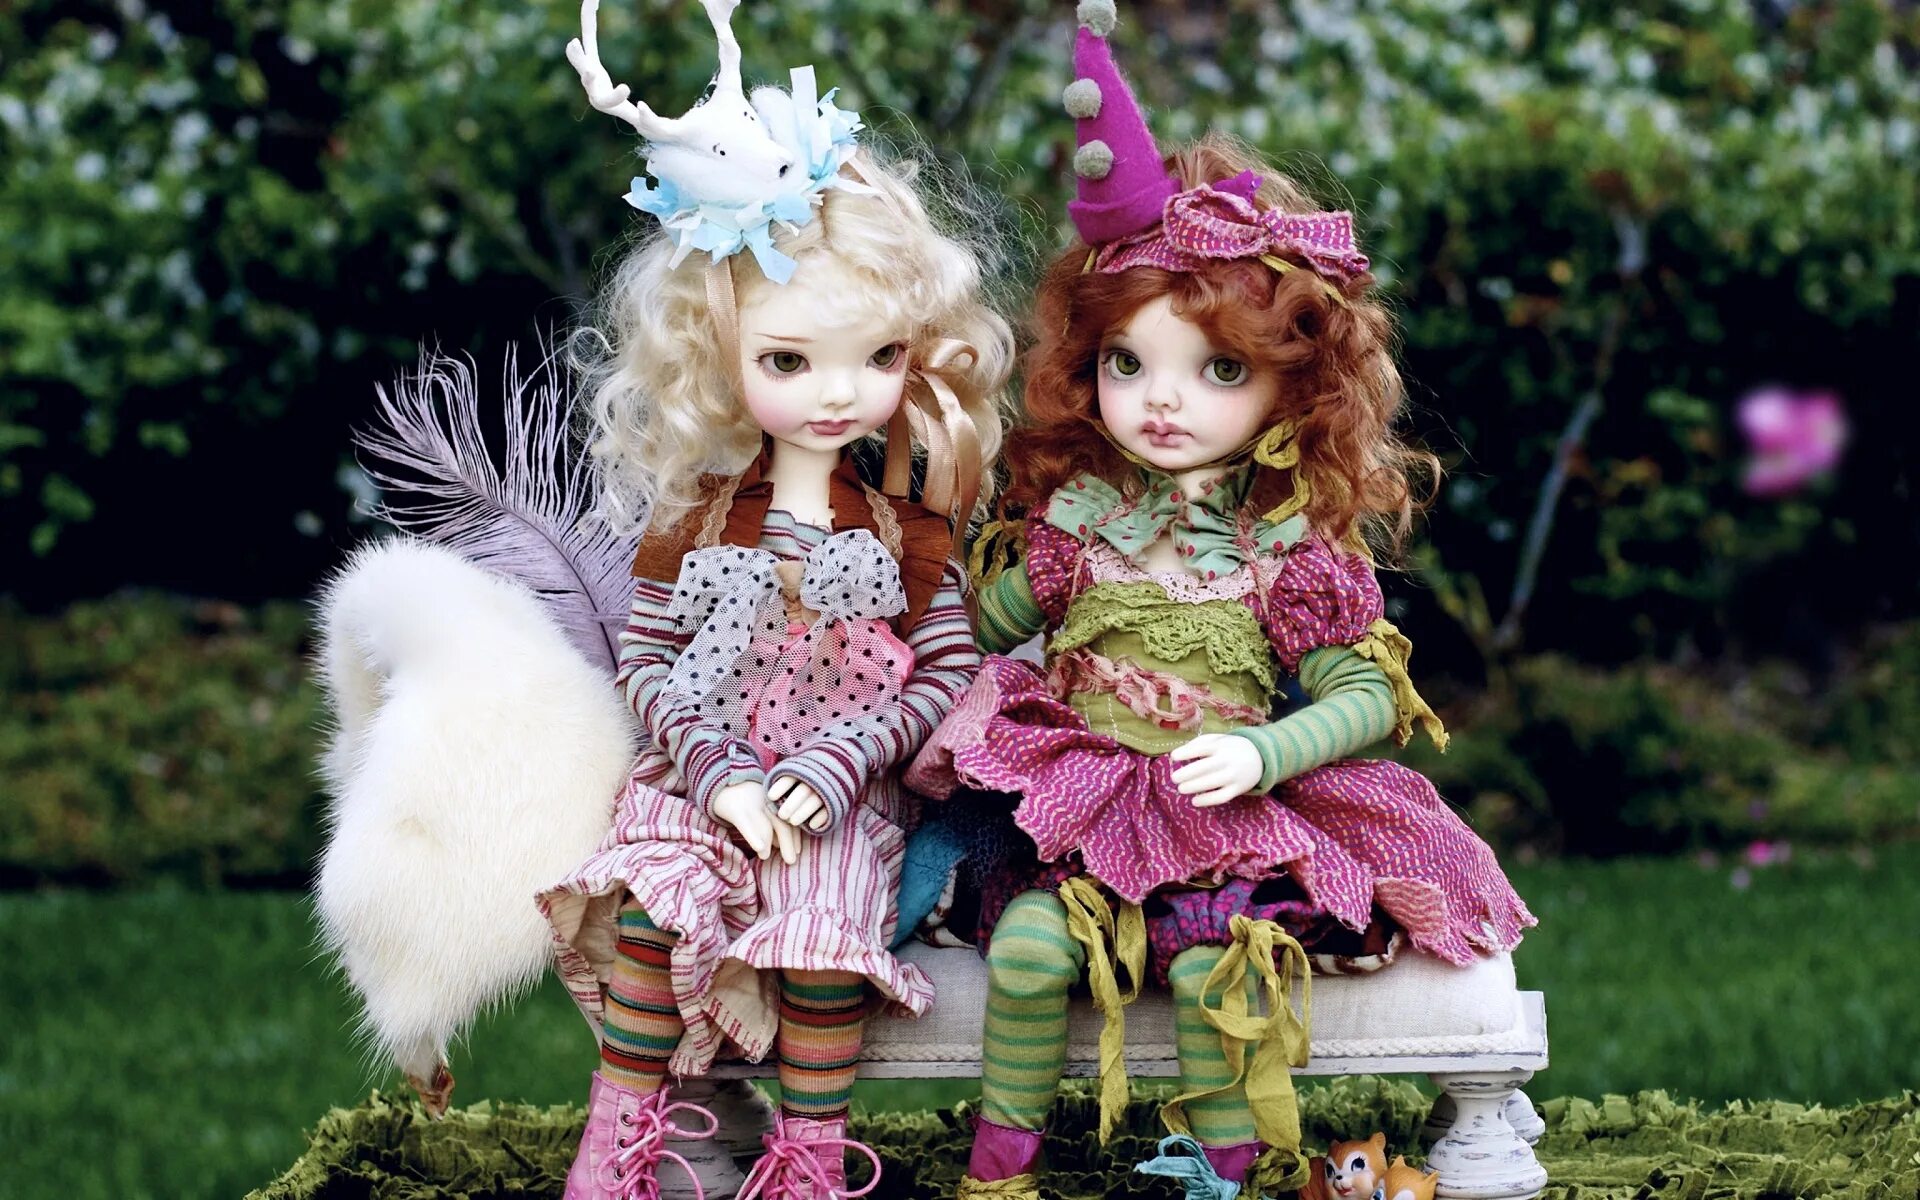 The dolls. Куклы. Красивые куклы. Красивые куклы для девочек. Rerksj.